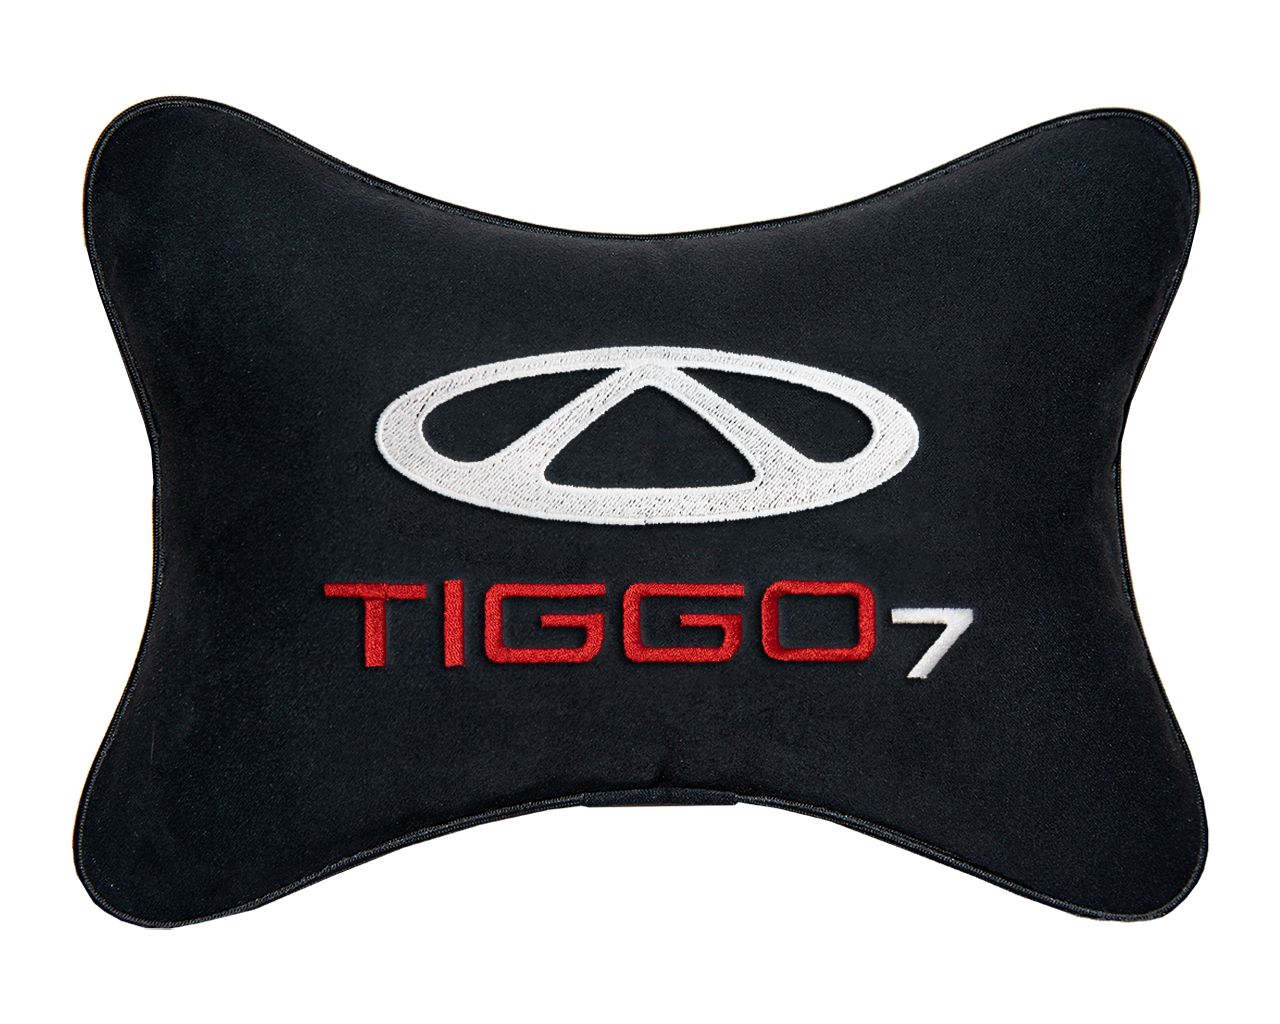 Подушка на подголовник алькантара Black с логотипом автомобиля CHERY Tiggo 7